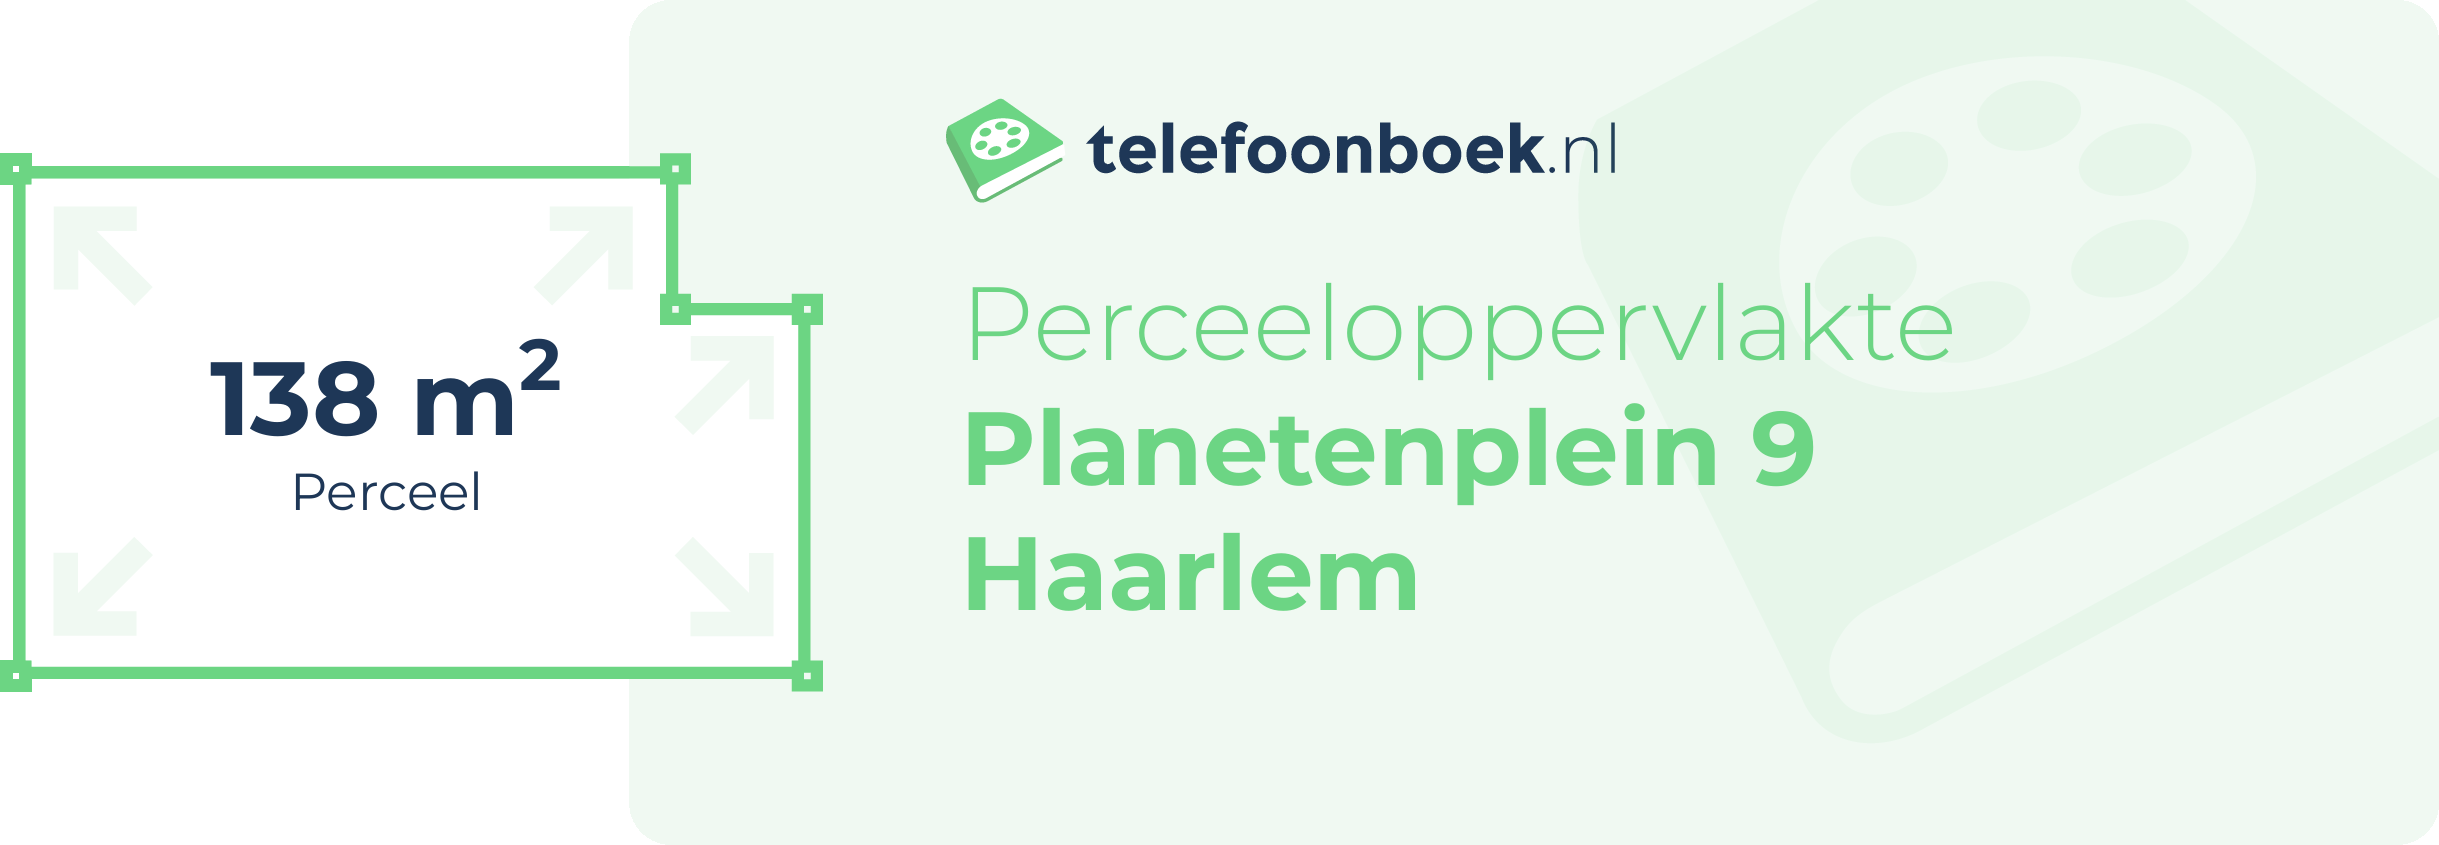 Perceeloppervlakte Planetenplein 9 Haarlem